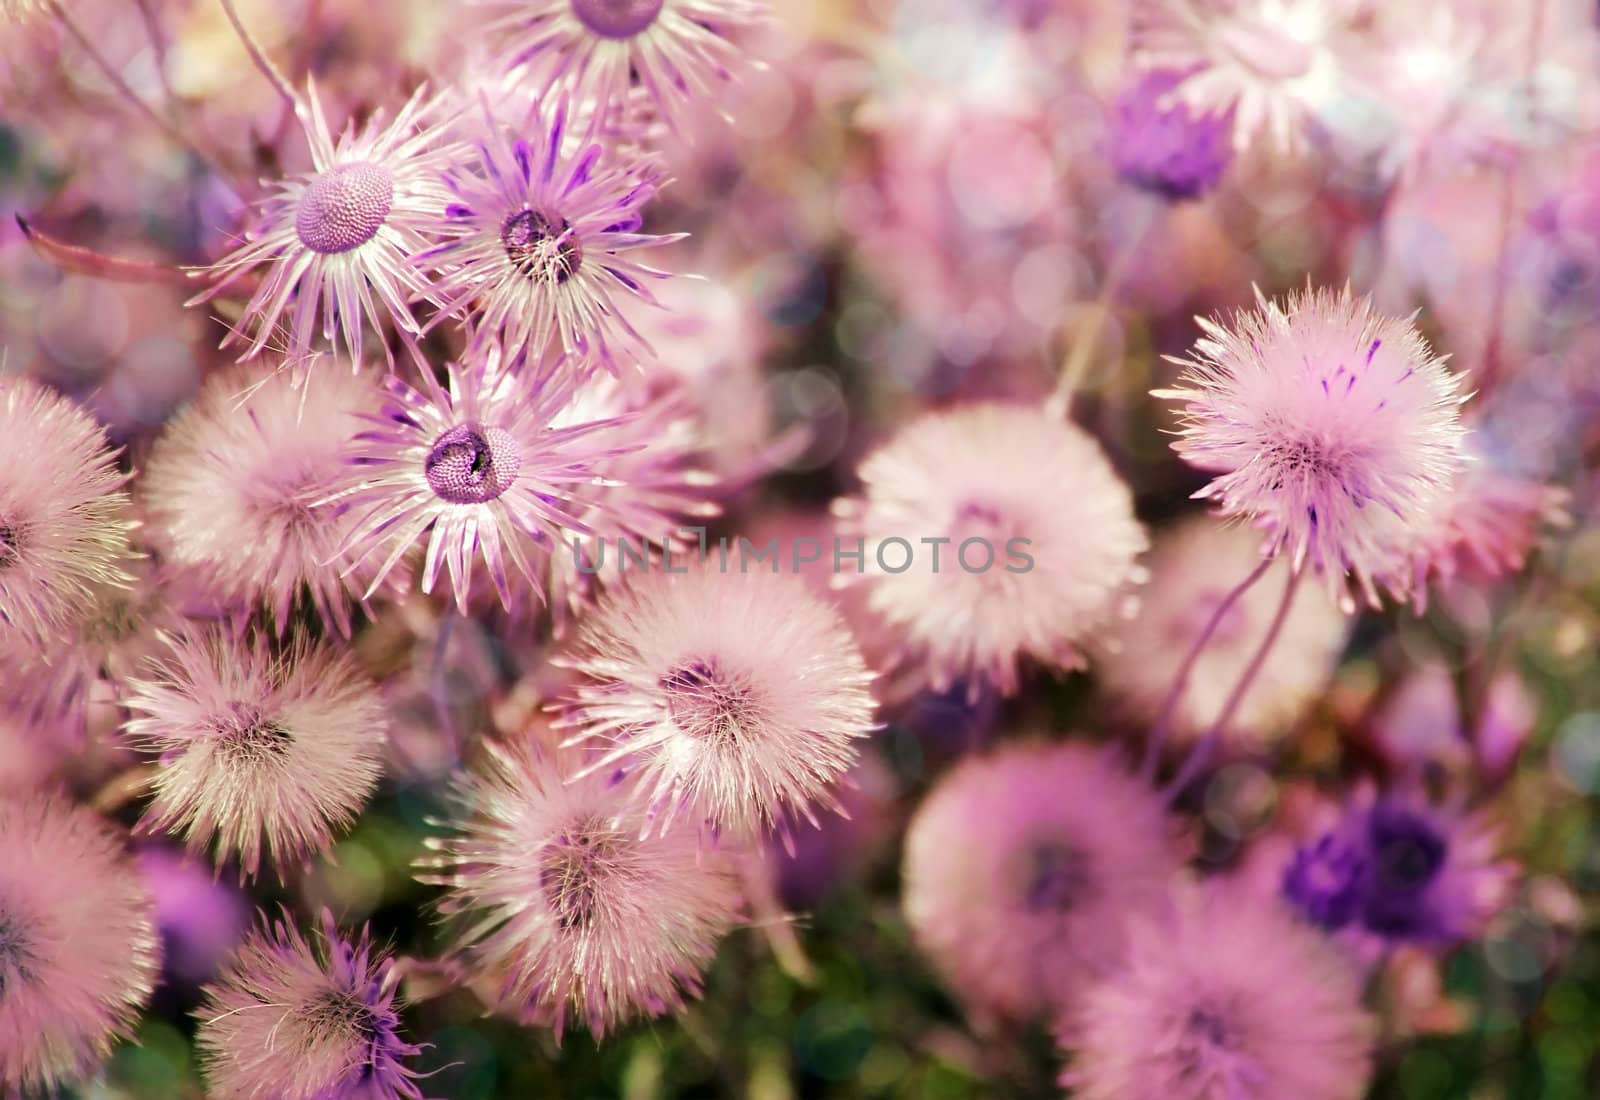 beautiful wild flowers by irisphoto4